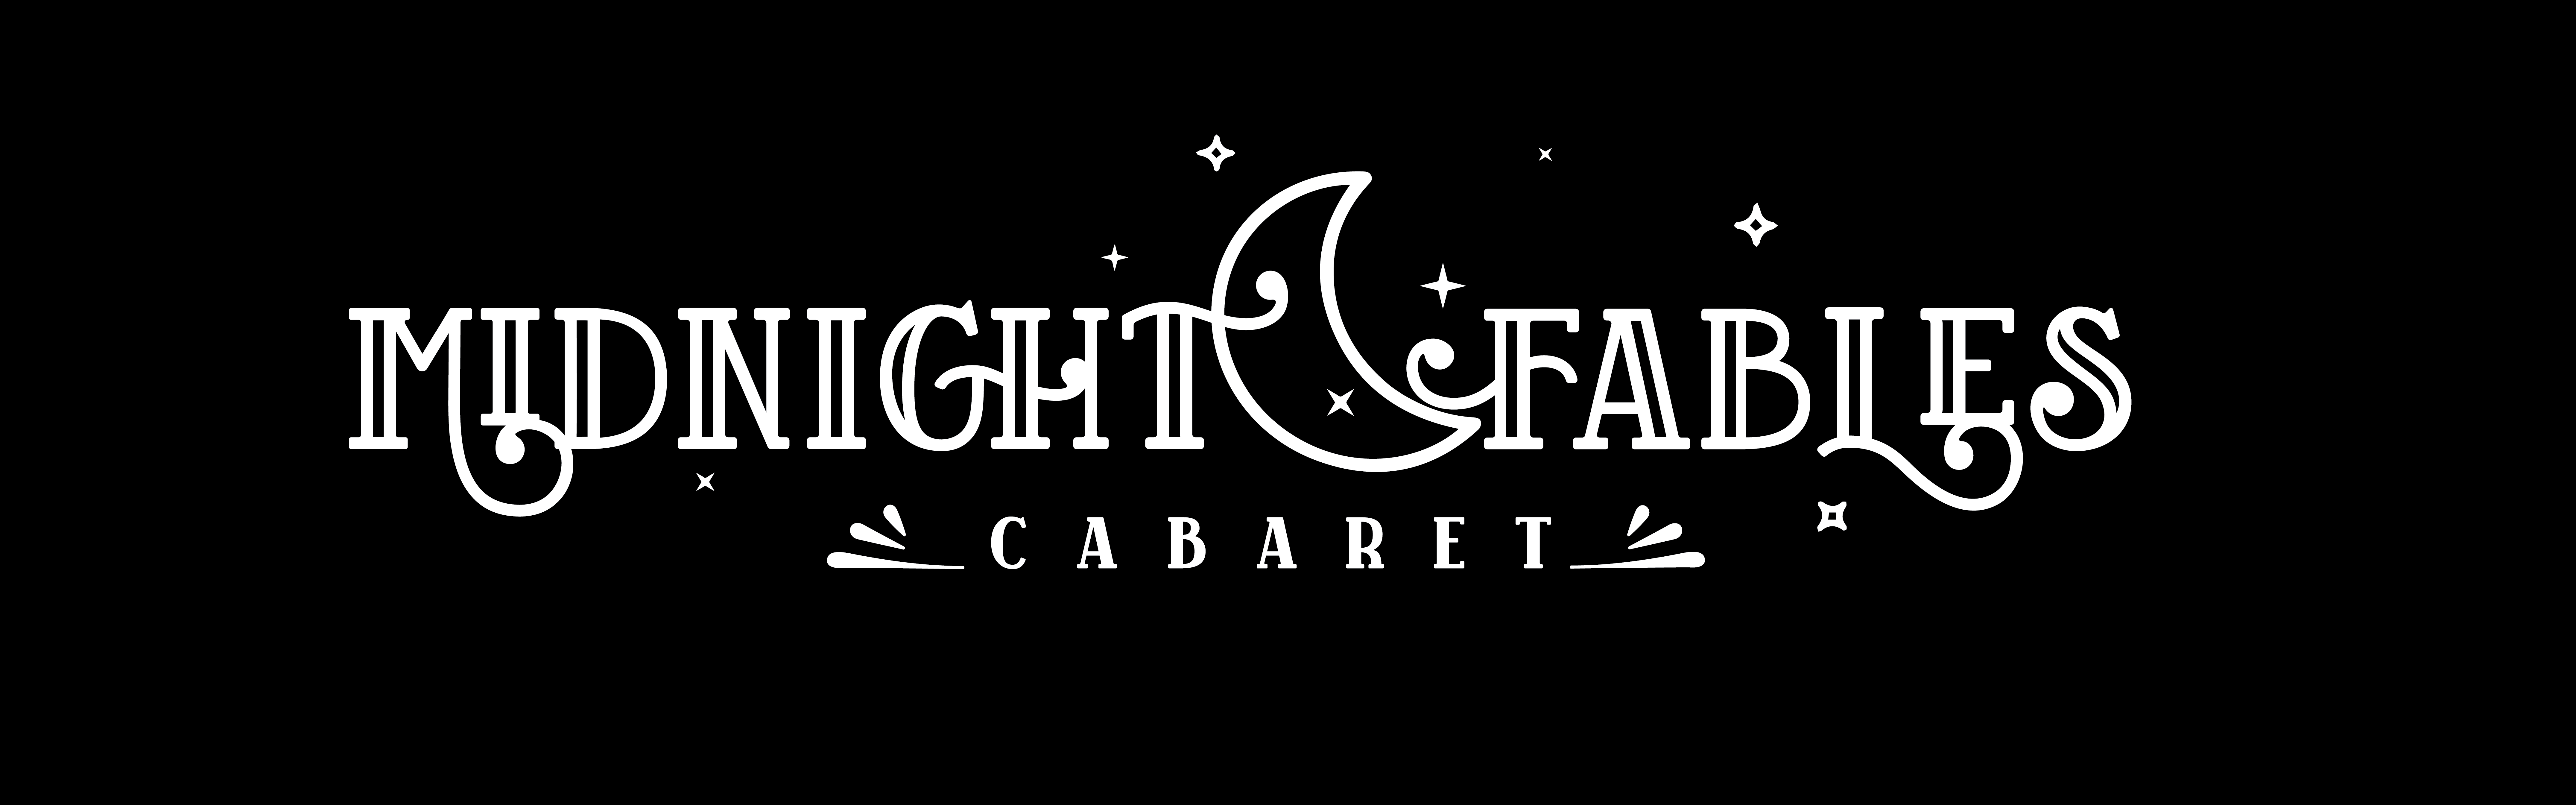 Midnight Fables Cabaret Logo